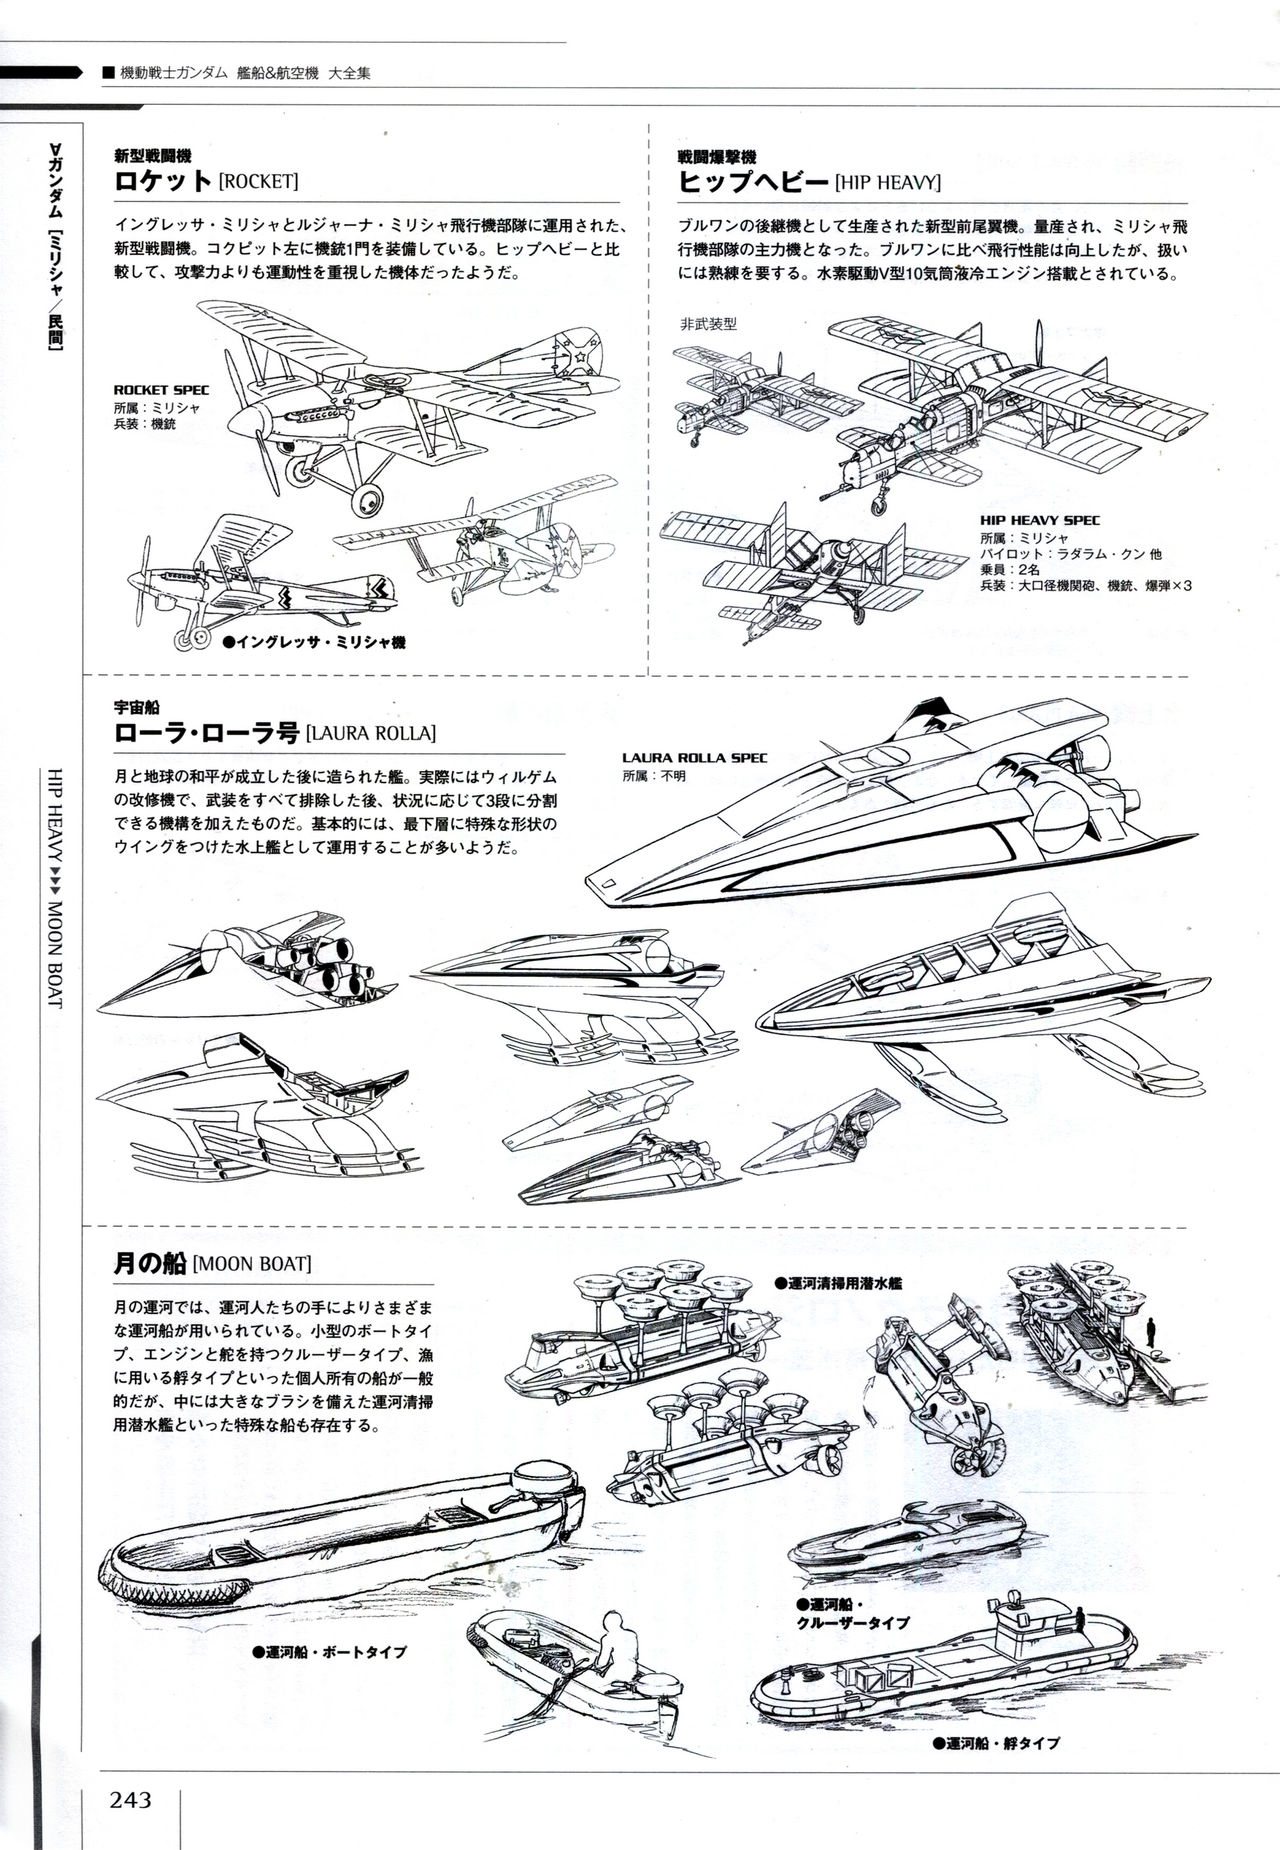 Mobile Suit Gundam - Ship & Aerospace Plane Encyclopedia - Revised Edition 248